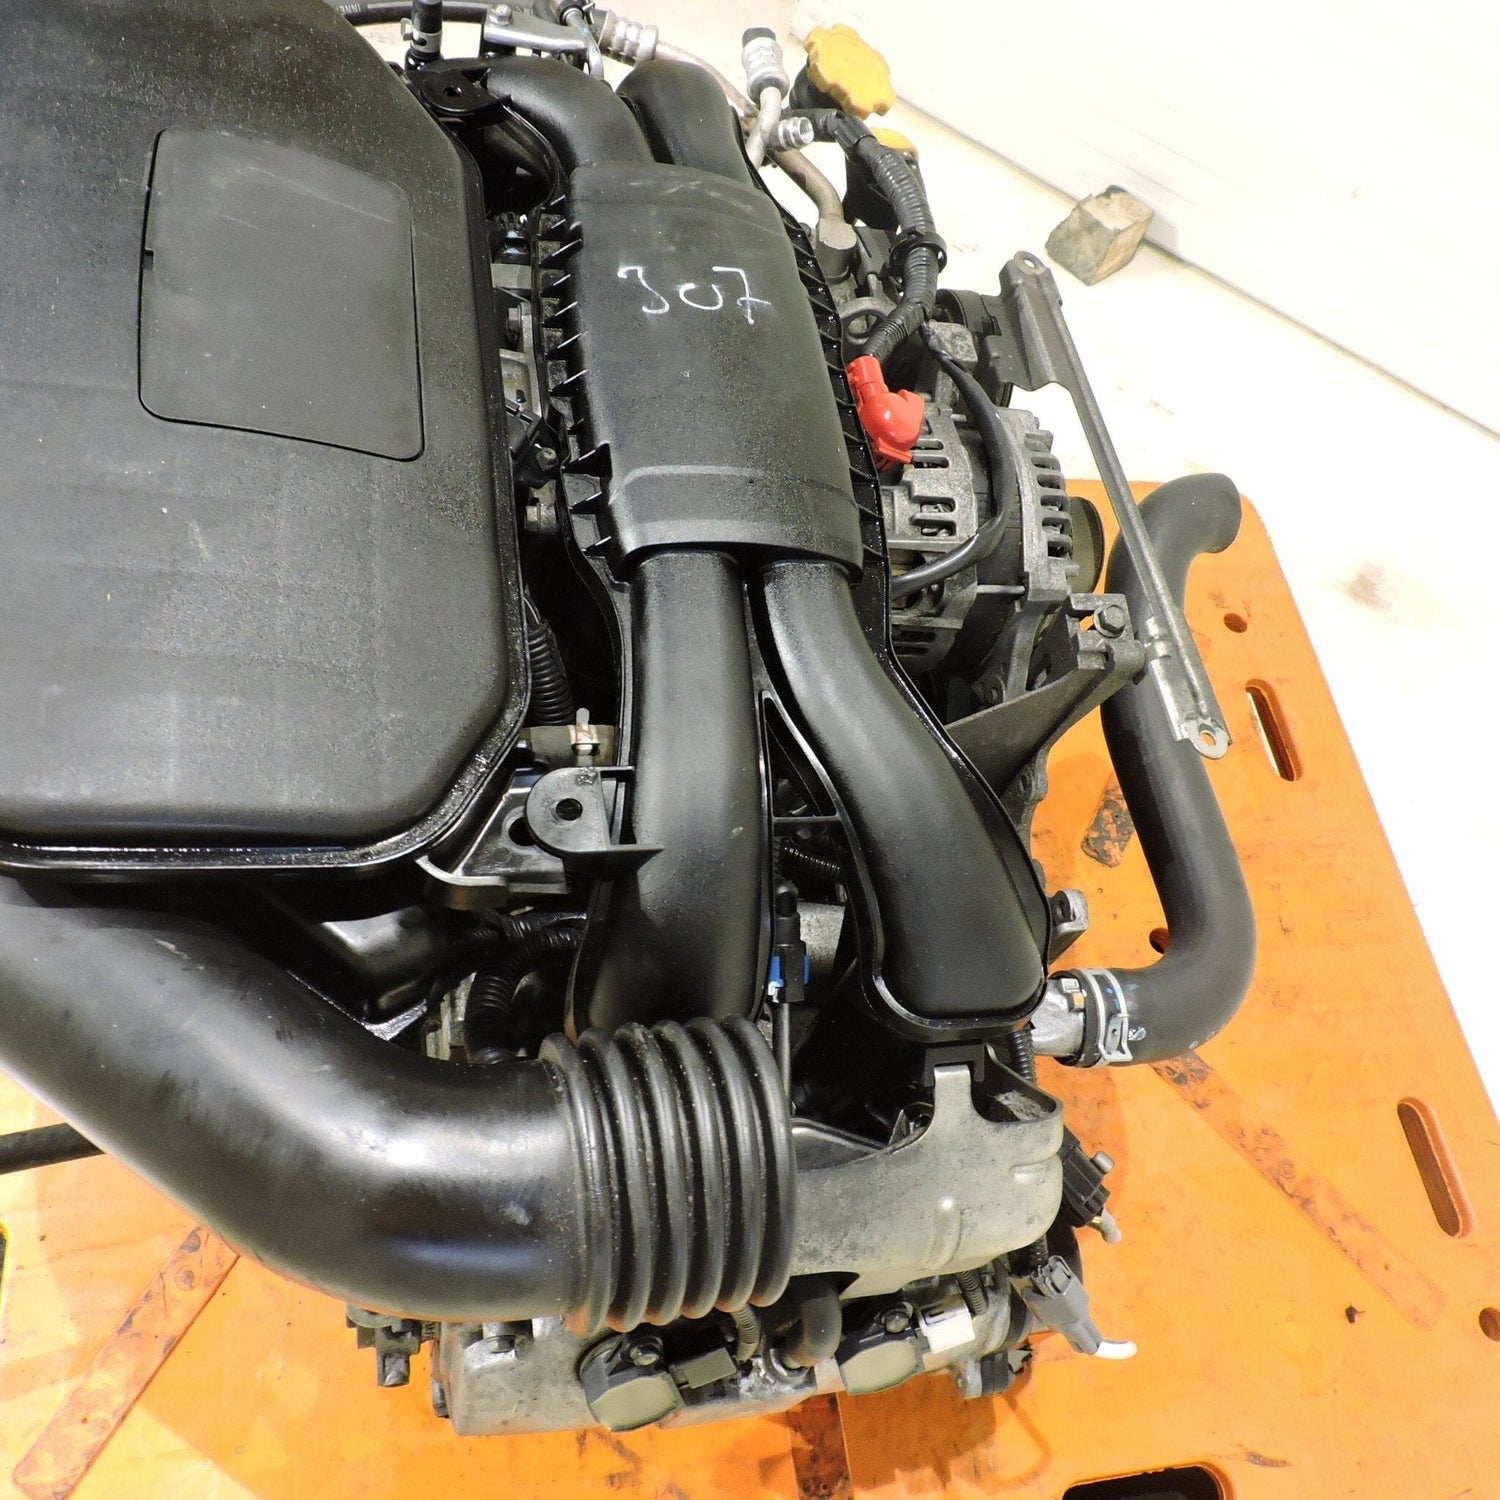 Subaru Legacy 2010-2011 2.5L Jdm Engine - EJ25 Sohc - Low Mile JDM Engines